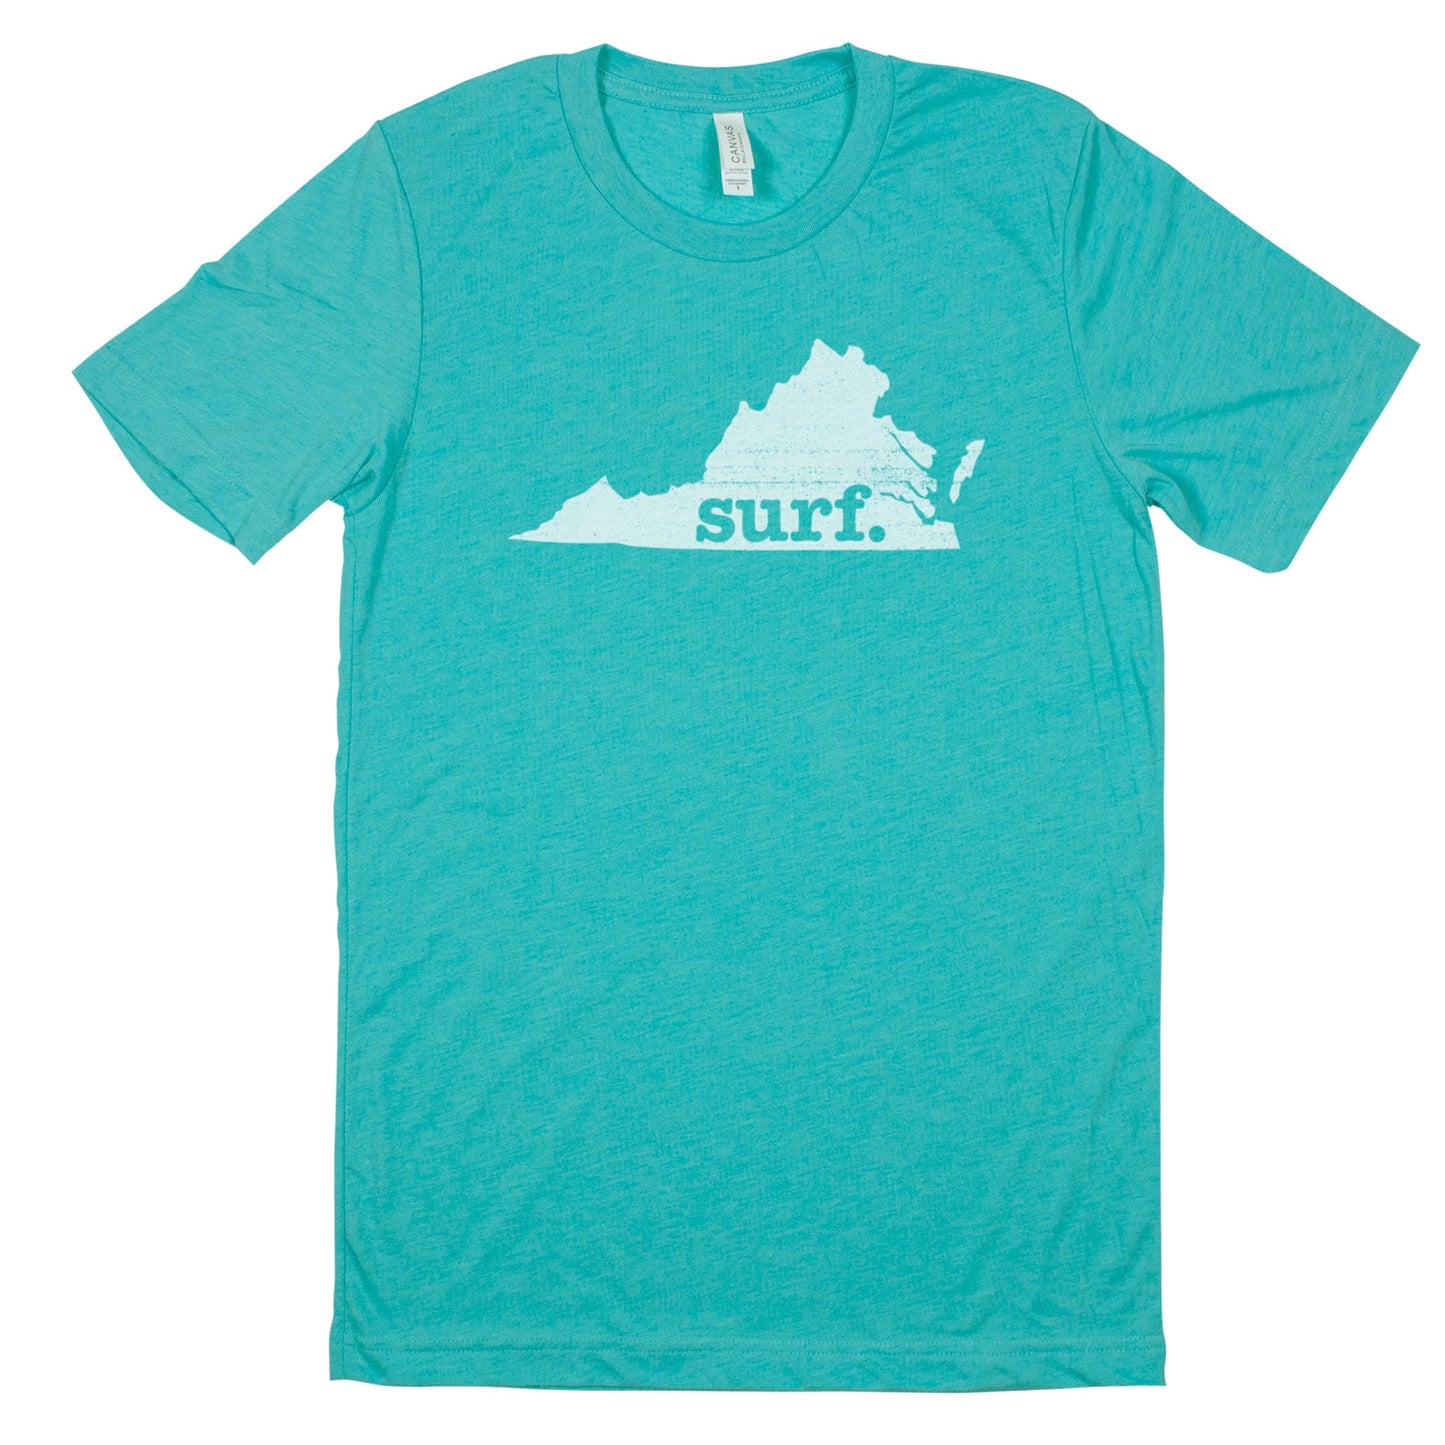 surf. Men's Unisex T-Shirt - Virginia